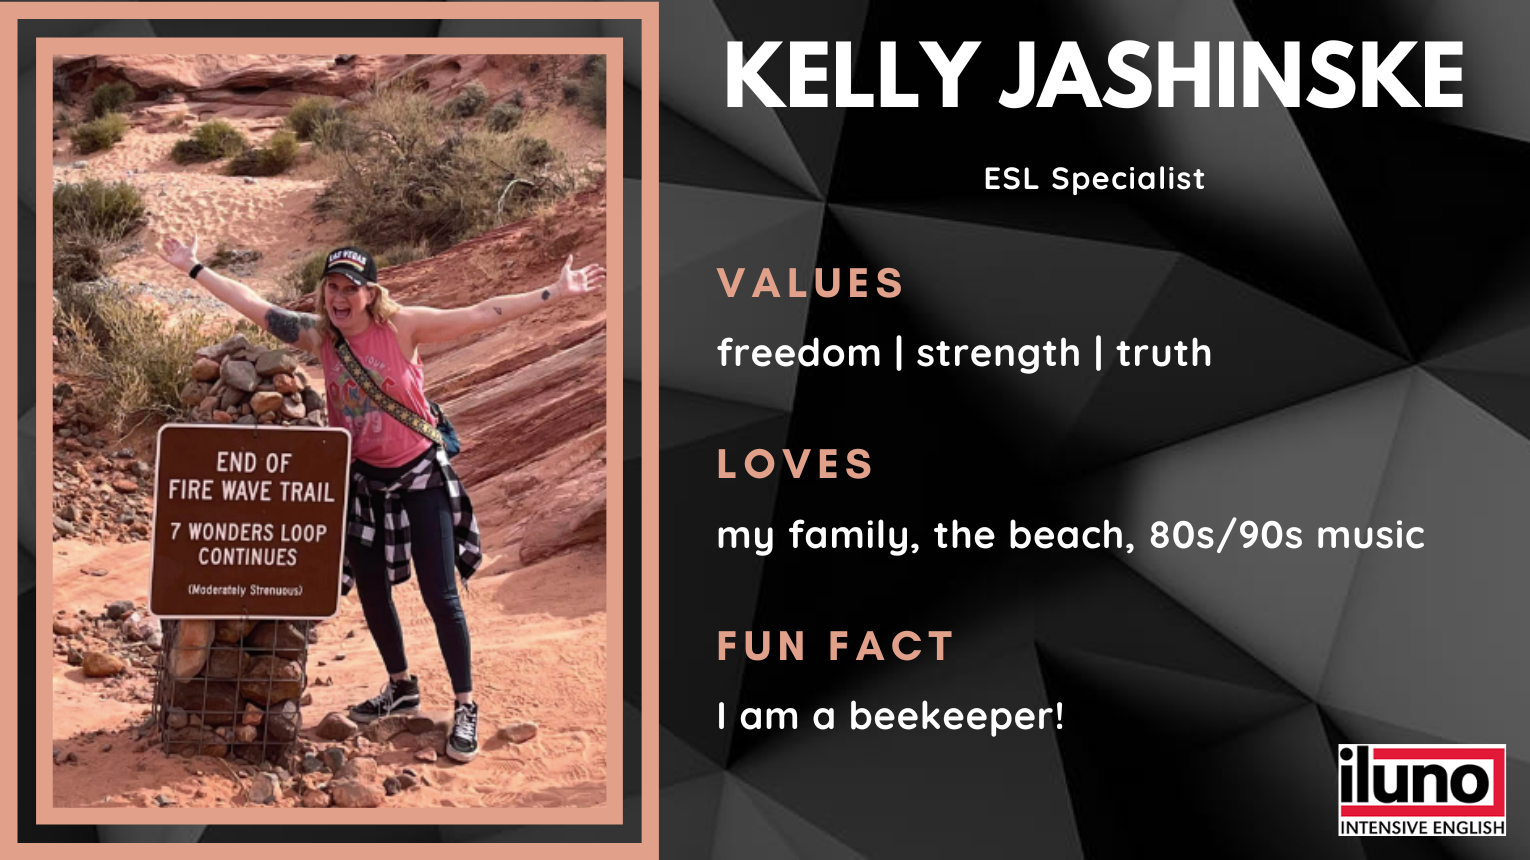 Kelly Jashinske ILUNO Biography